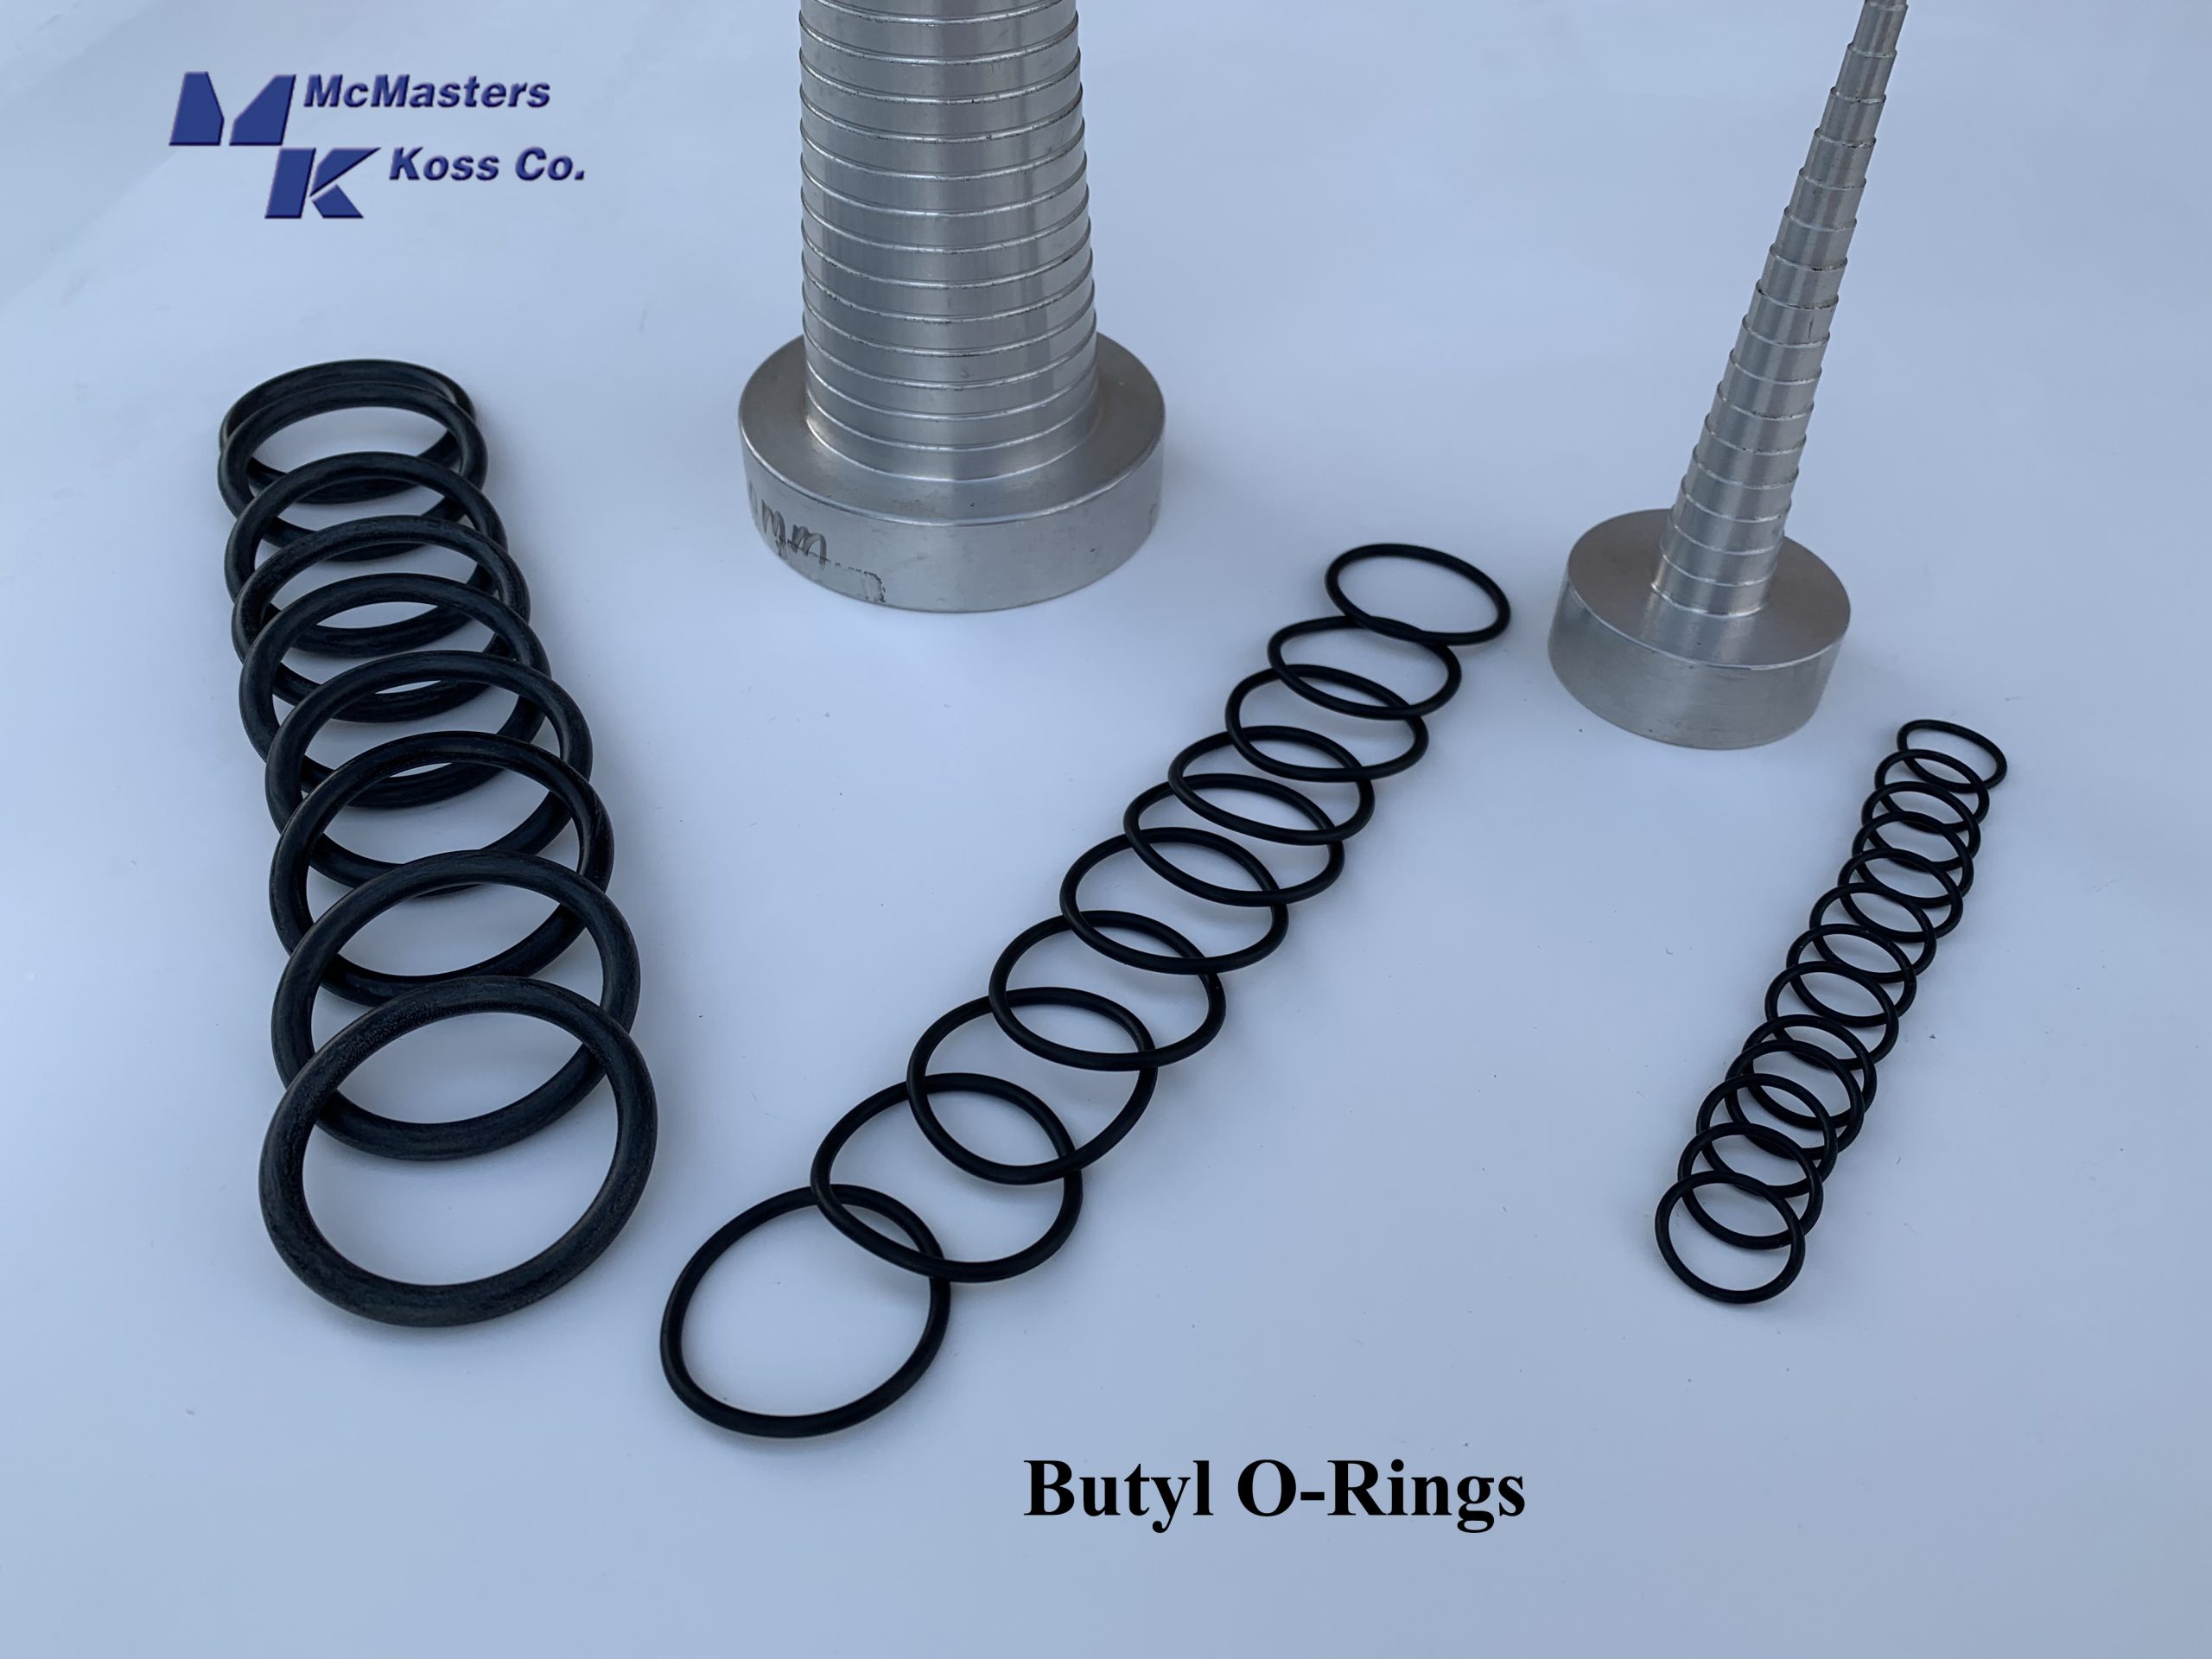 Butyl O-Rings